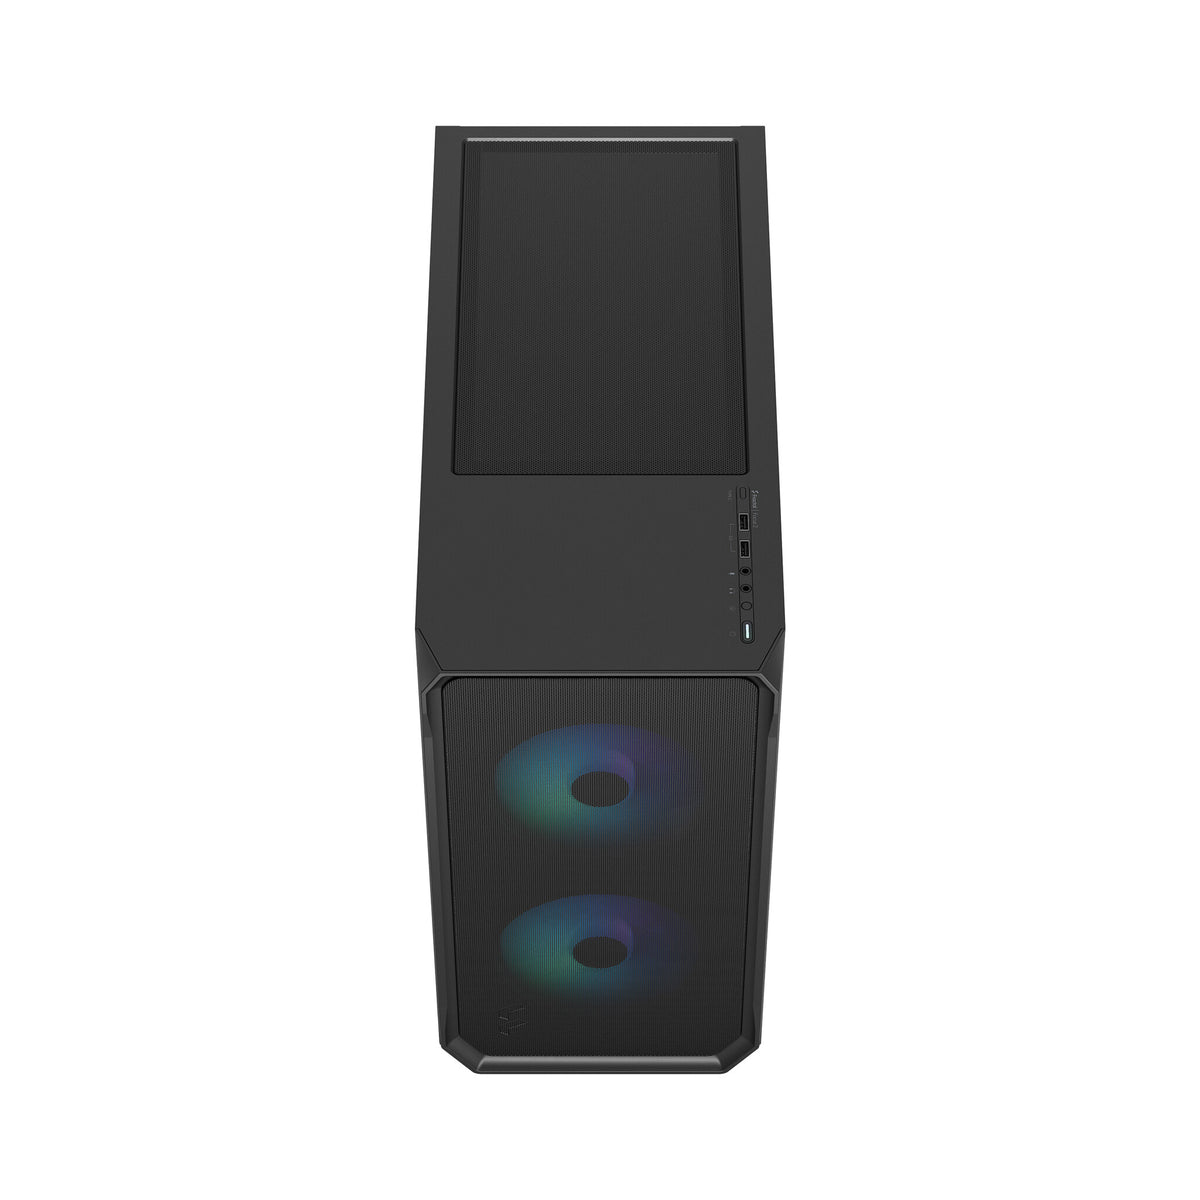 Fractal Design Focus 2 RGB - ATX Mid Tower Case in Black